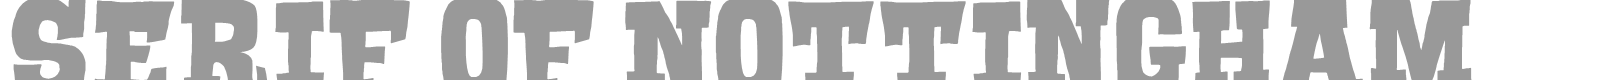 Font Serif of Nottingham